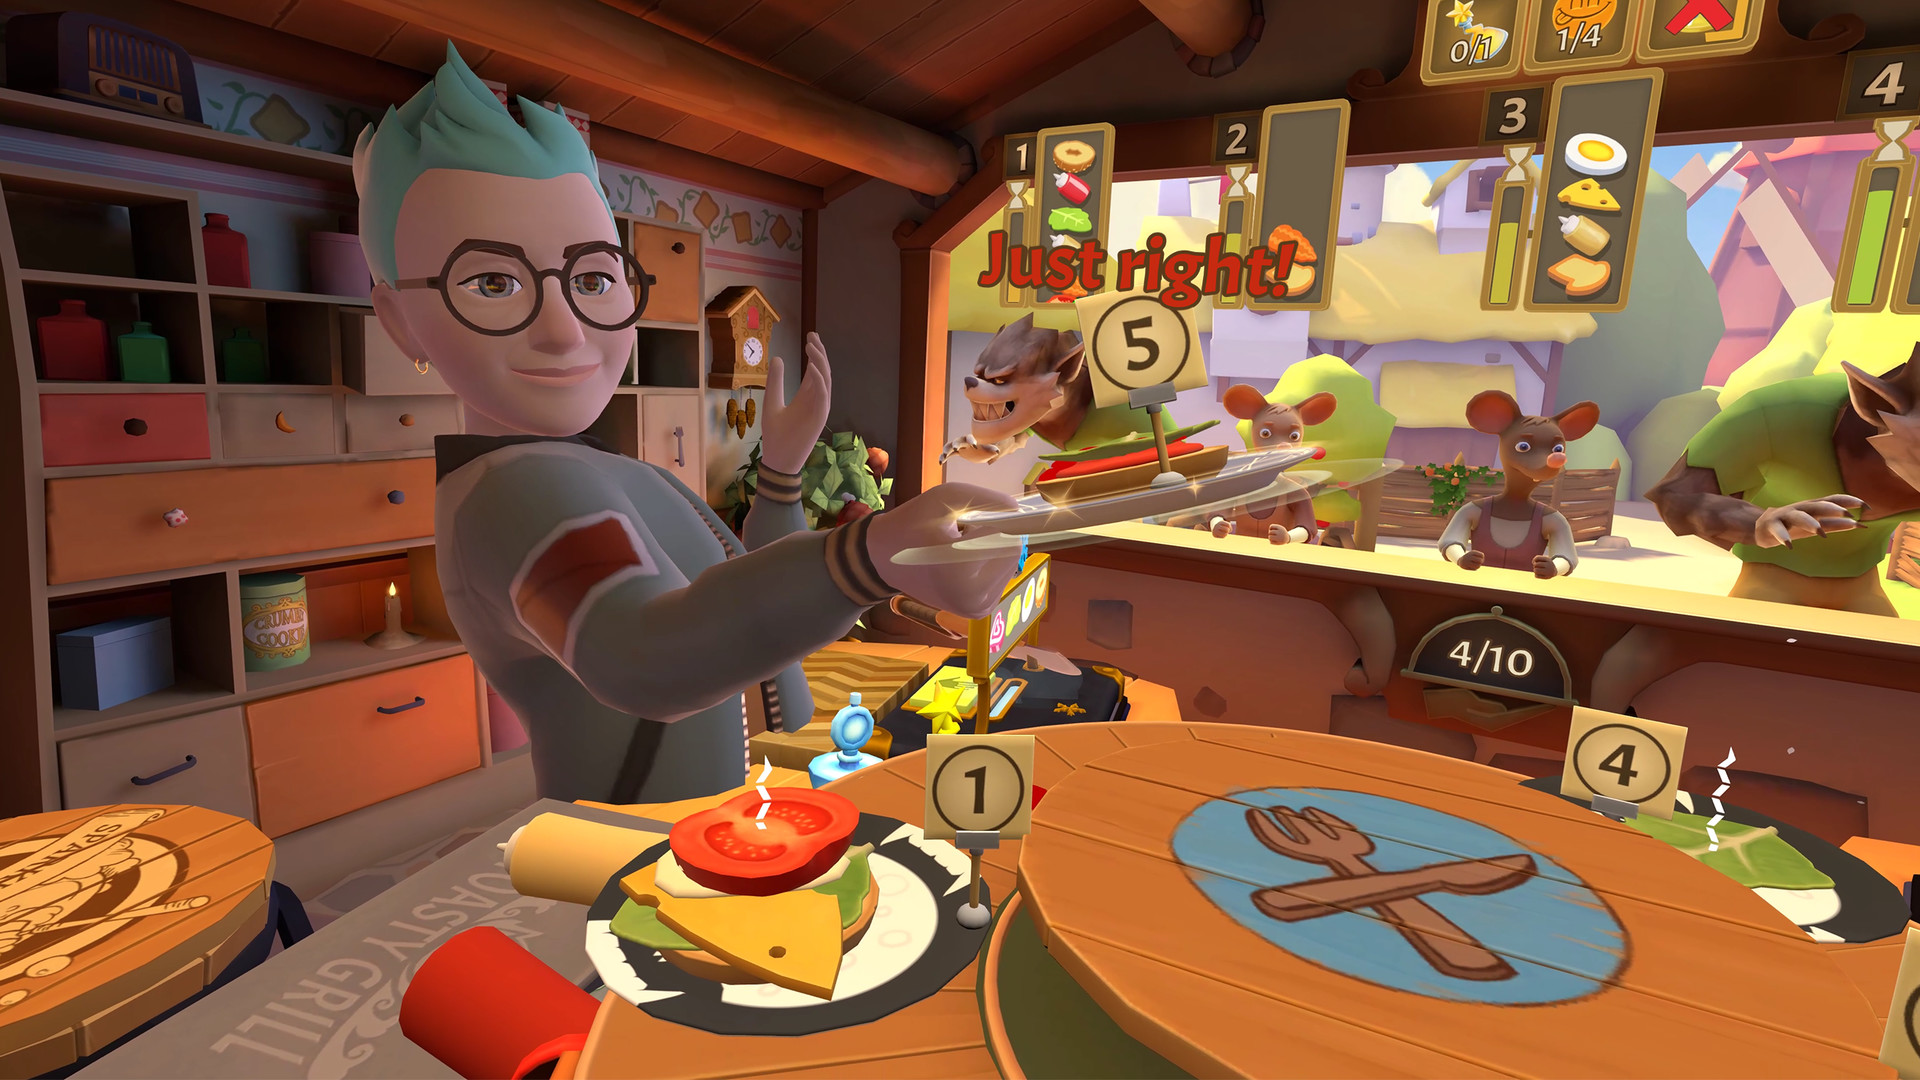 Oculus Quest 游戏《快乐厨房》Cook-Out: A Sandwich Tale